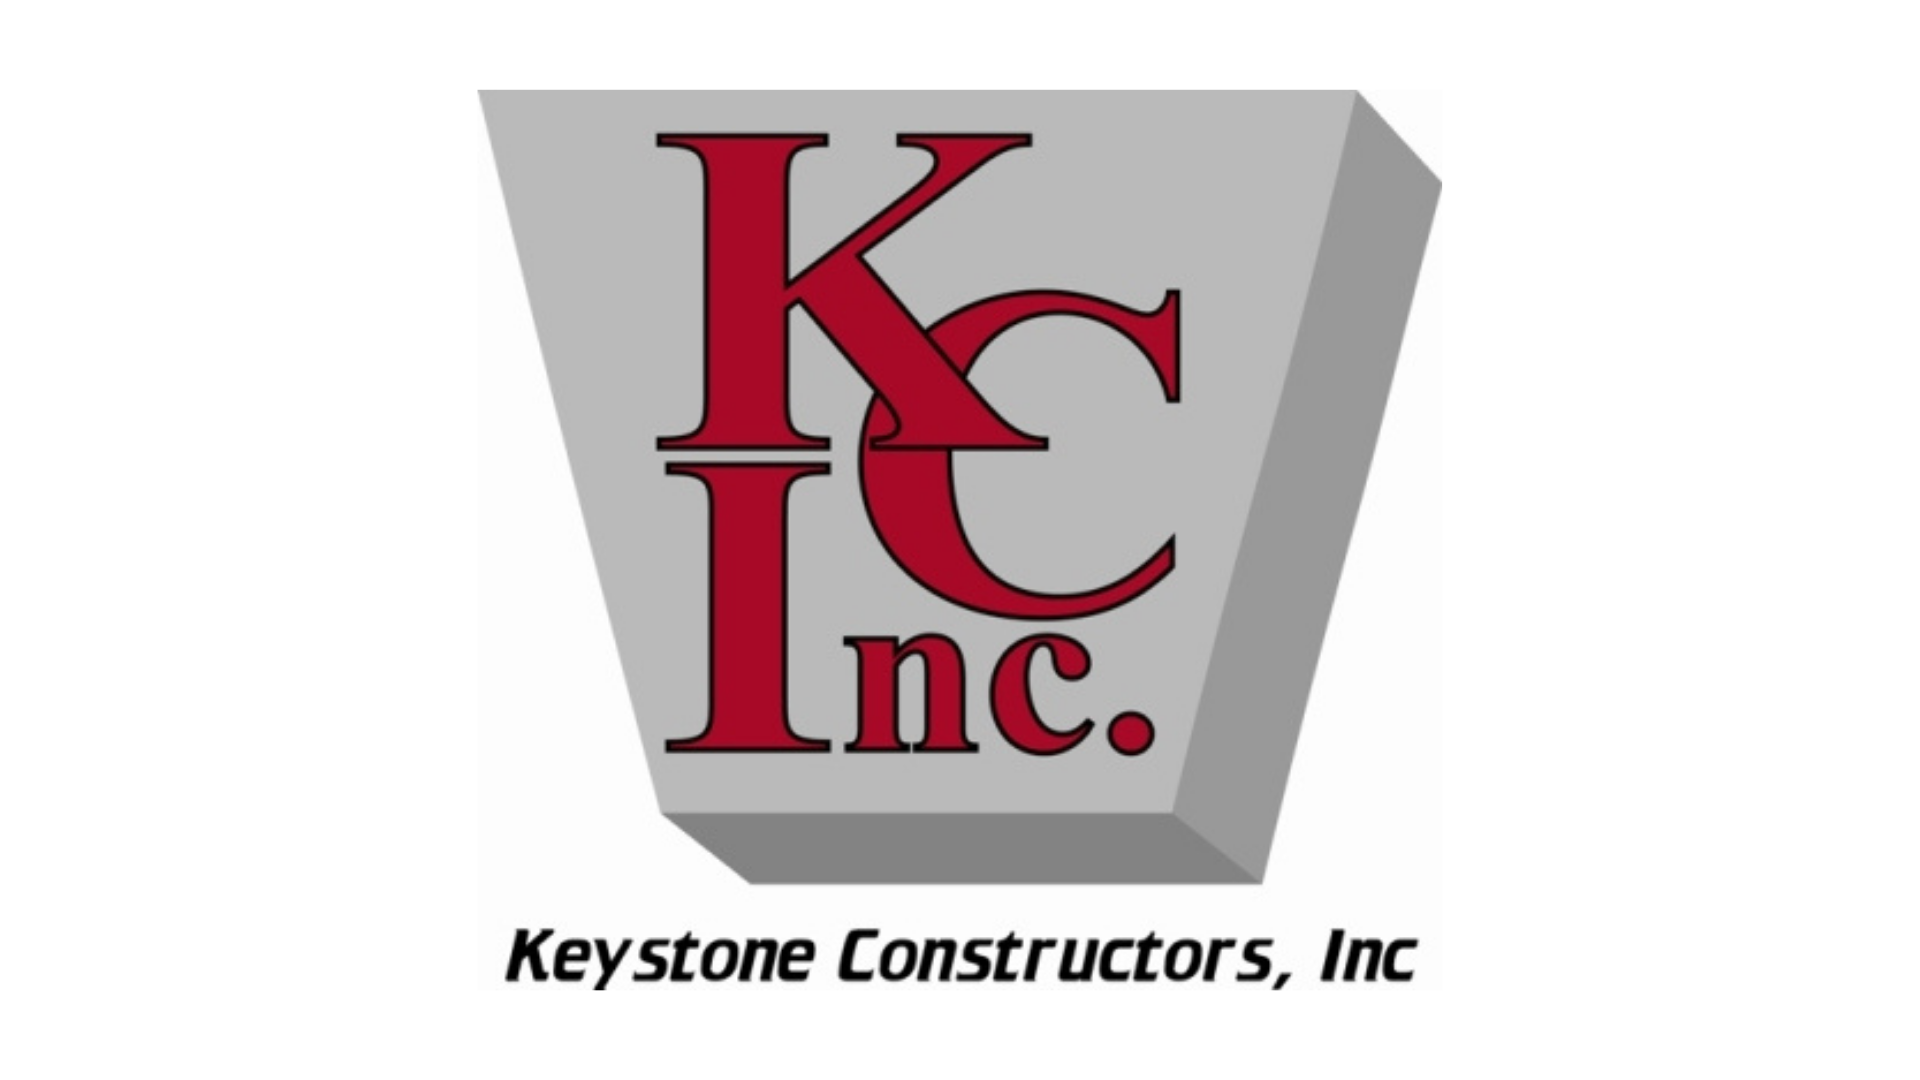 Keystone Constructors, Inc